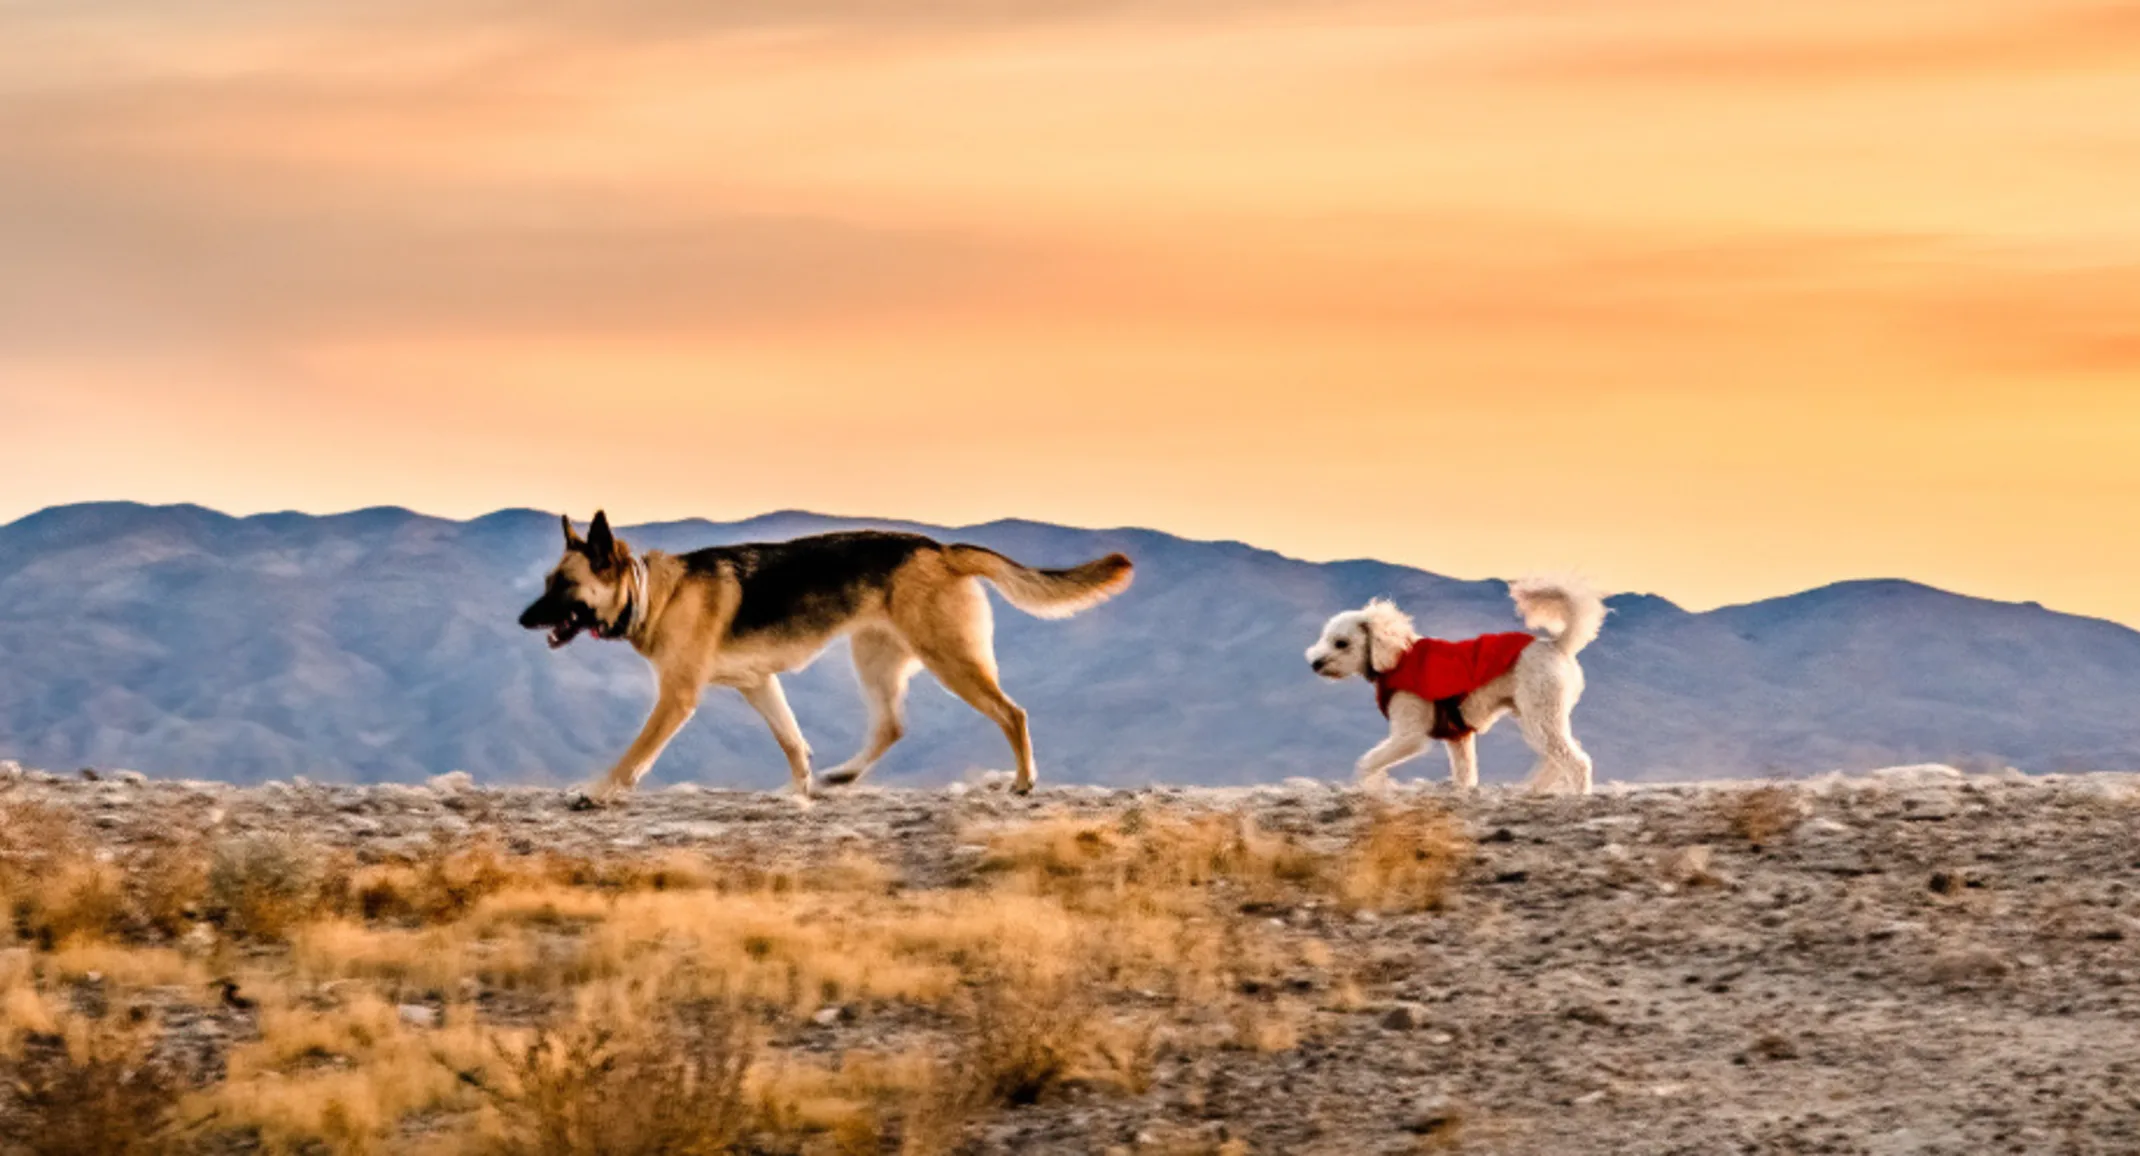 Two dogs walking on desert